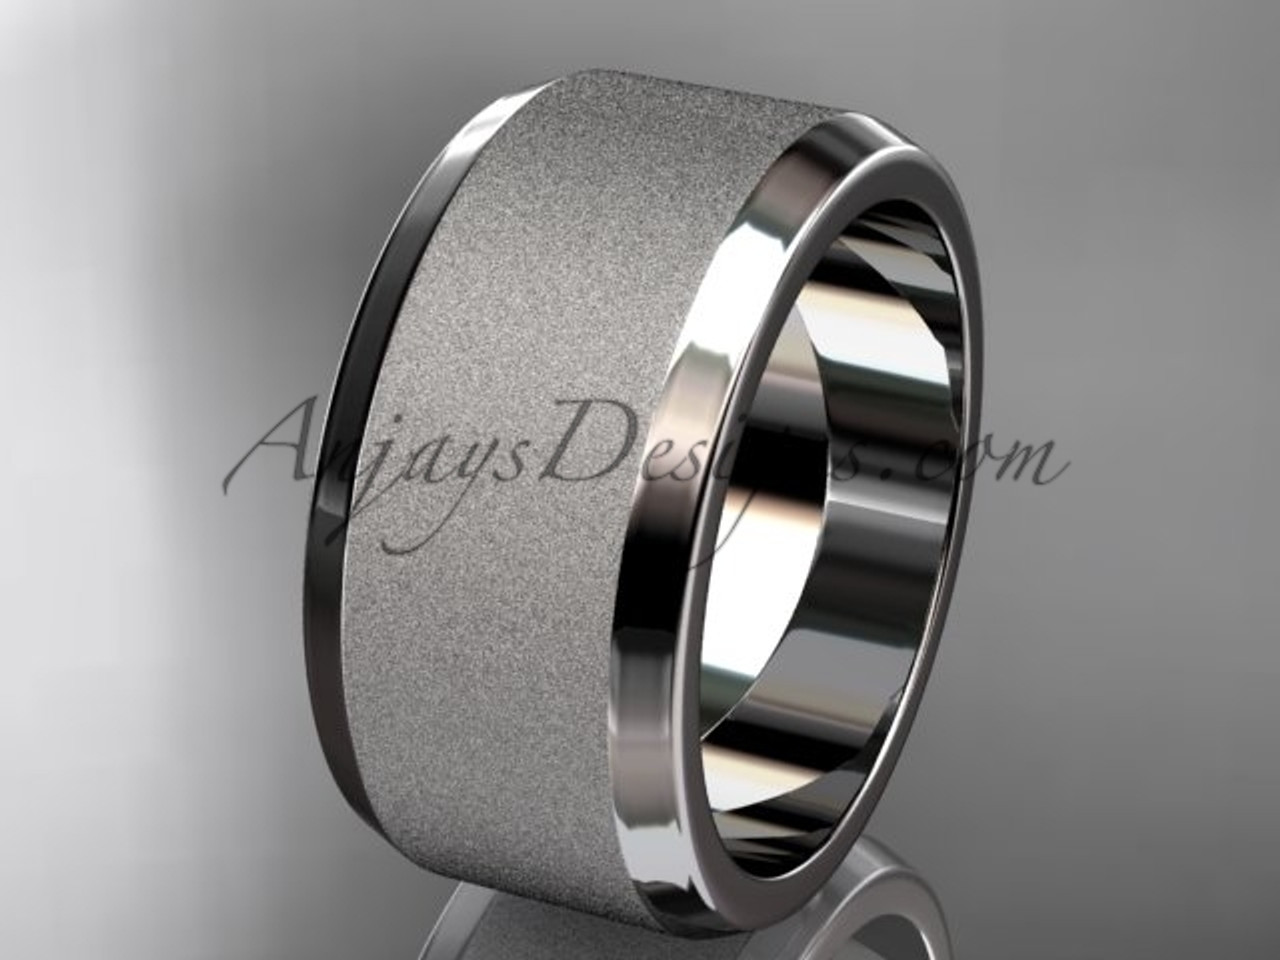 Platinum Diamond Engagement Ring 0.40 CT Solitaire Diamond Engagement Ring  Ethical Engagement Ring for Woman - Etsy